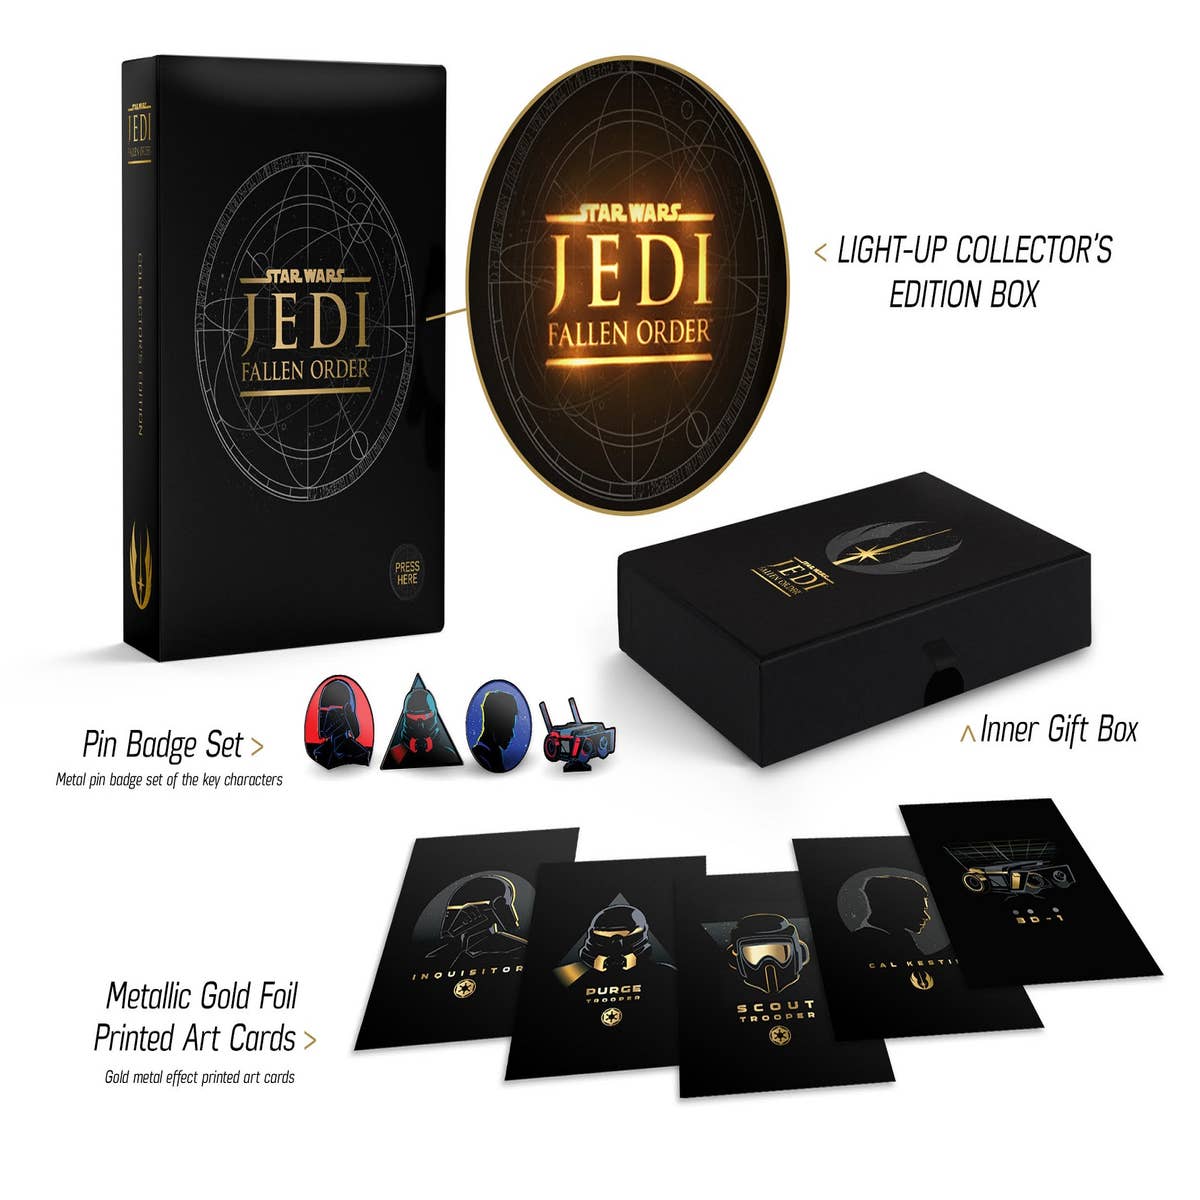 Star Wars Jedi: Survivor Collector's Edition (PS5)